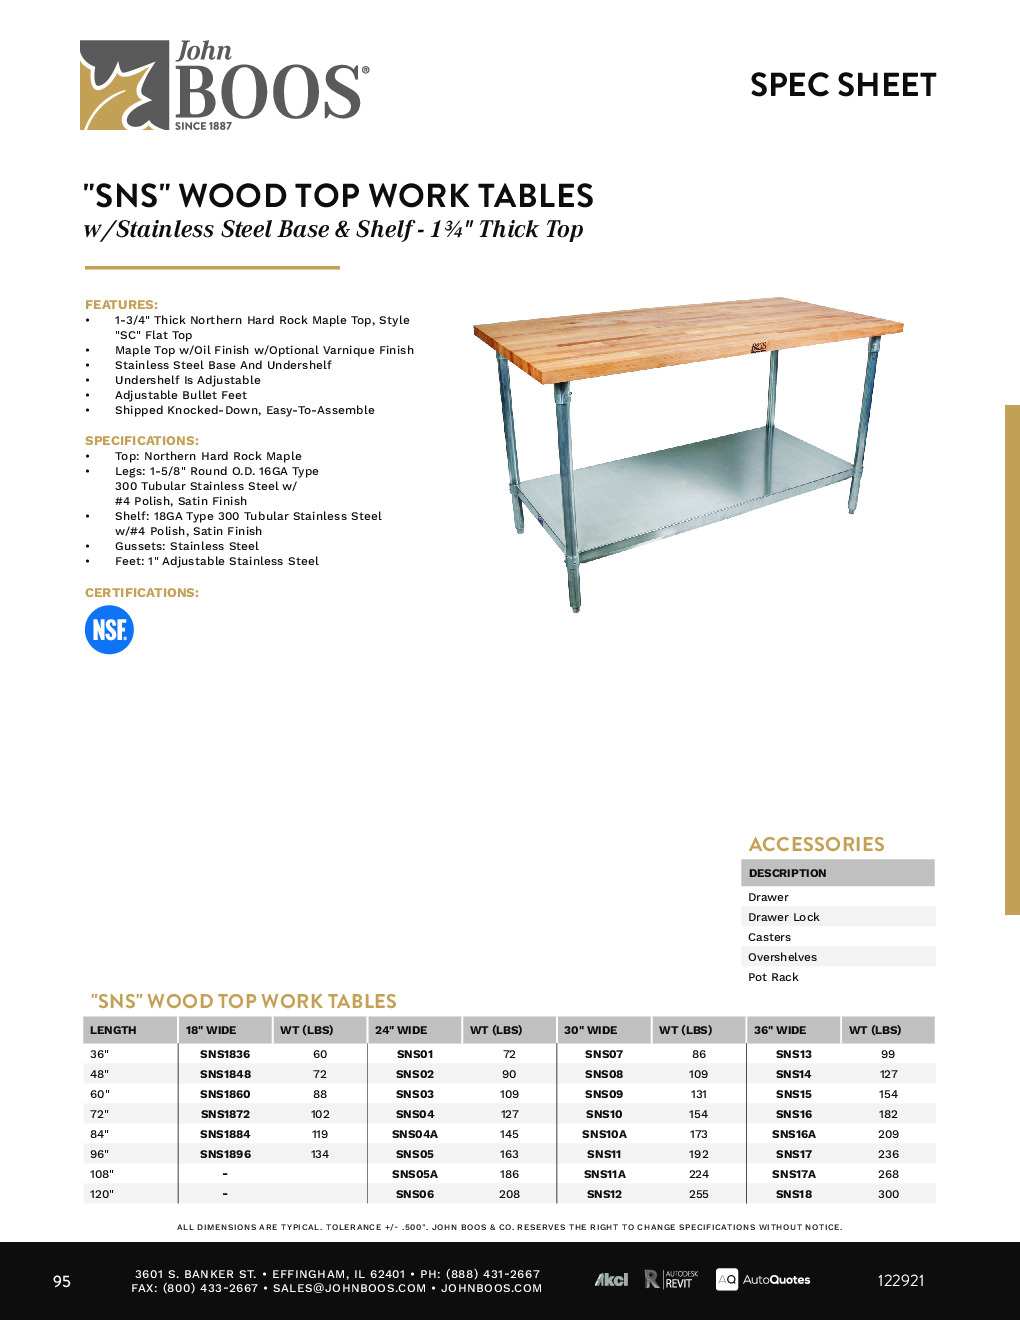 John Boos SNS02-X Wood Top Work Table